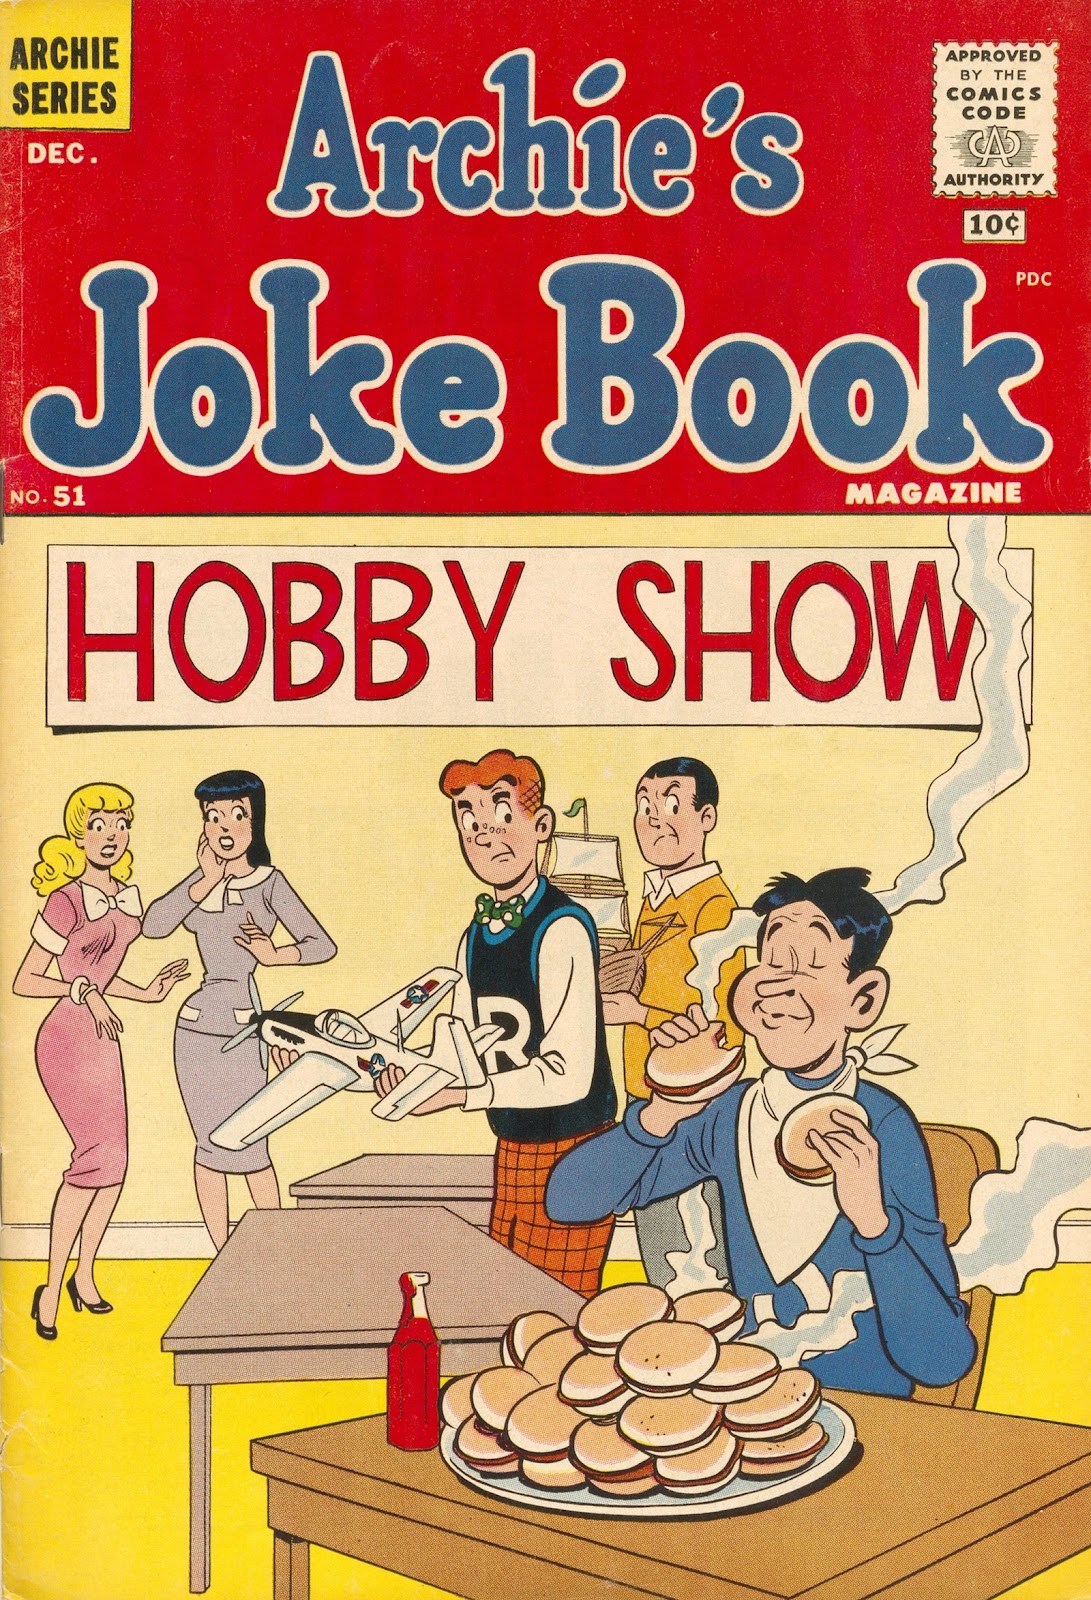 Archie's Joke Book Magazine issue 51 - Page 1